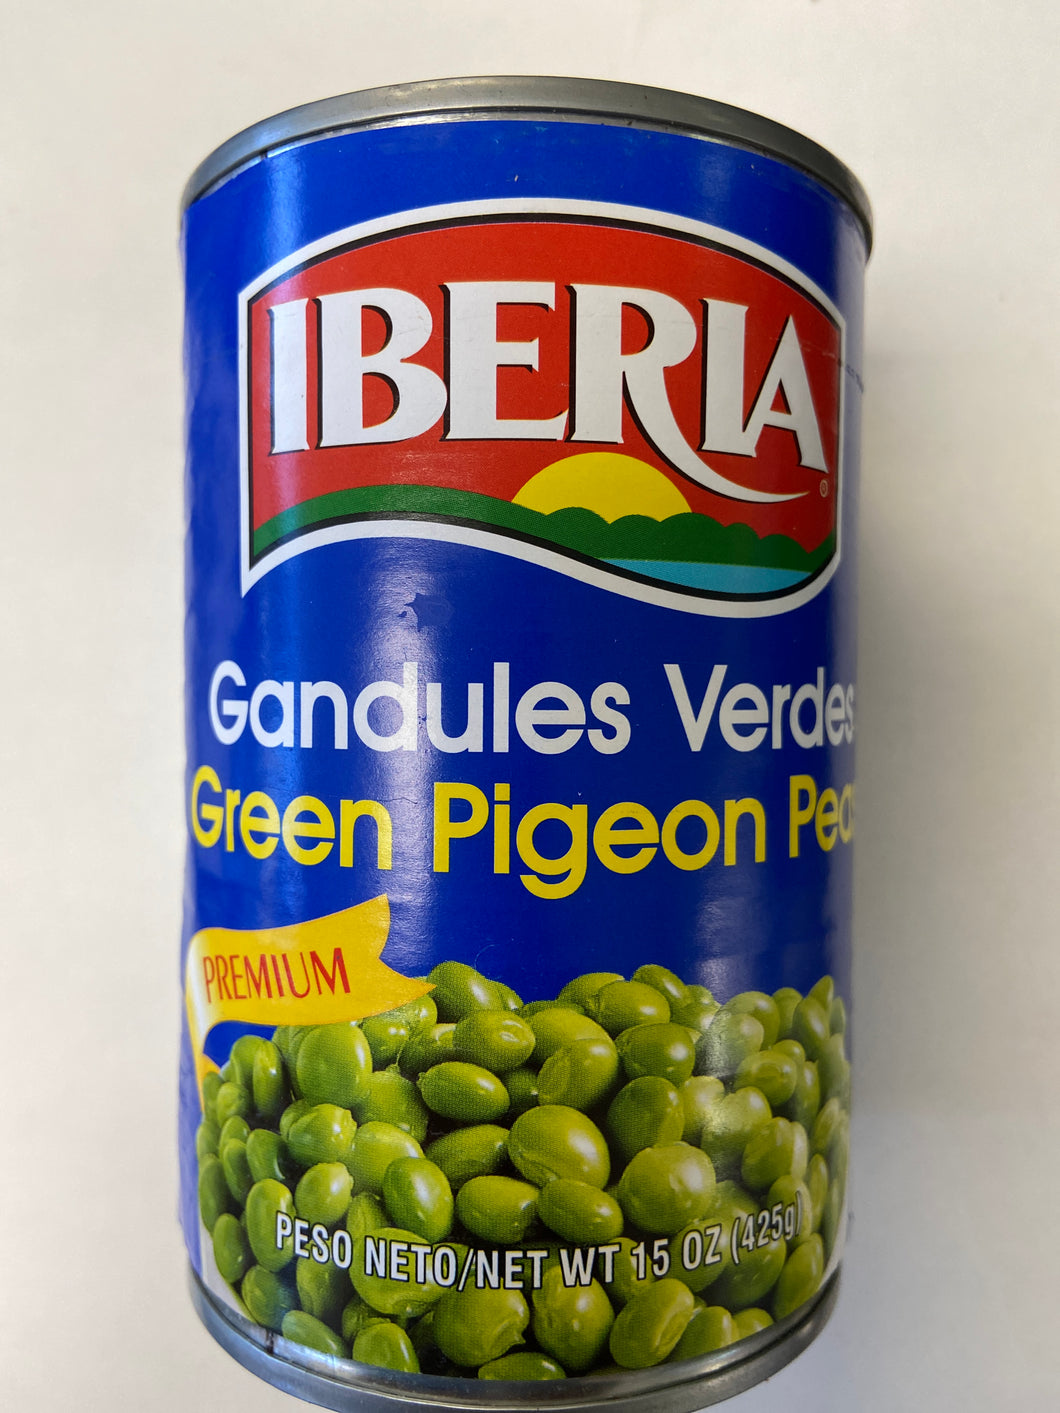 Gandules, Green  Pigeon peas, Iberia